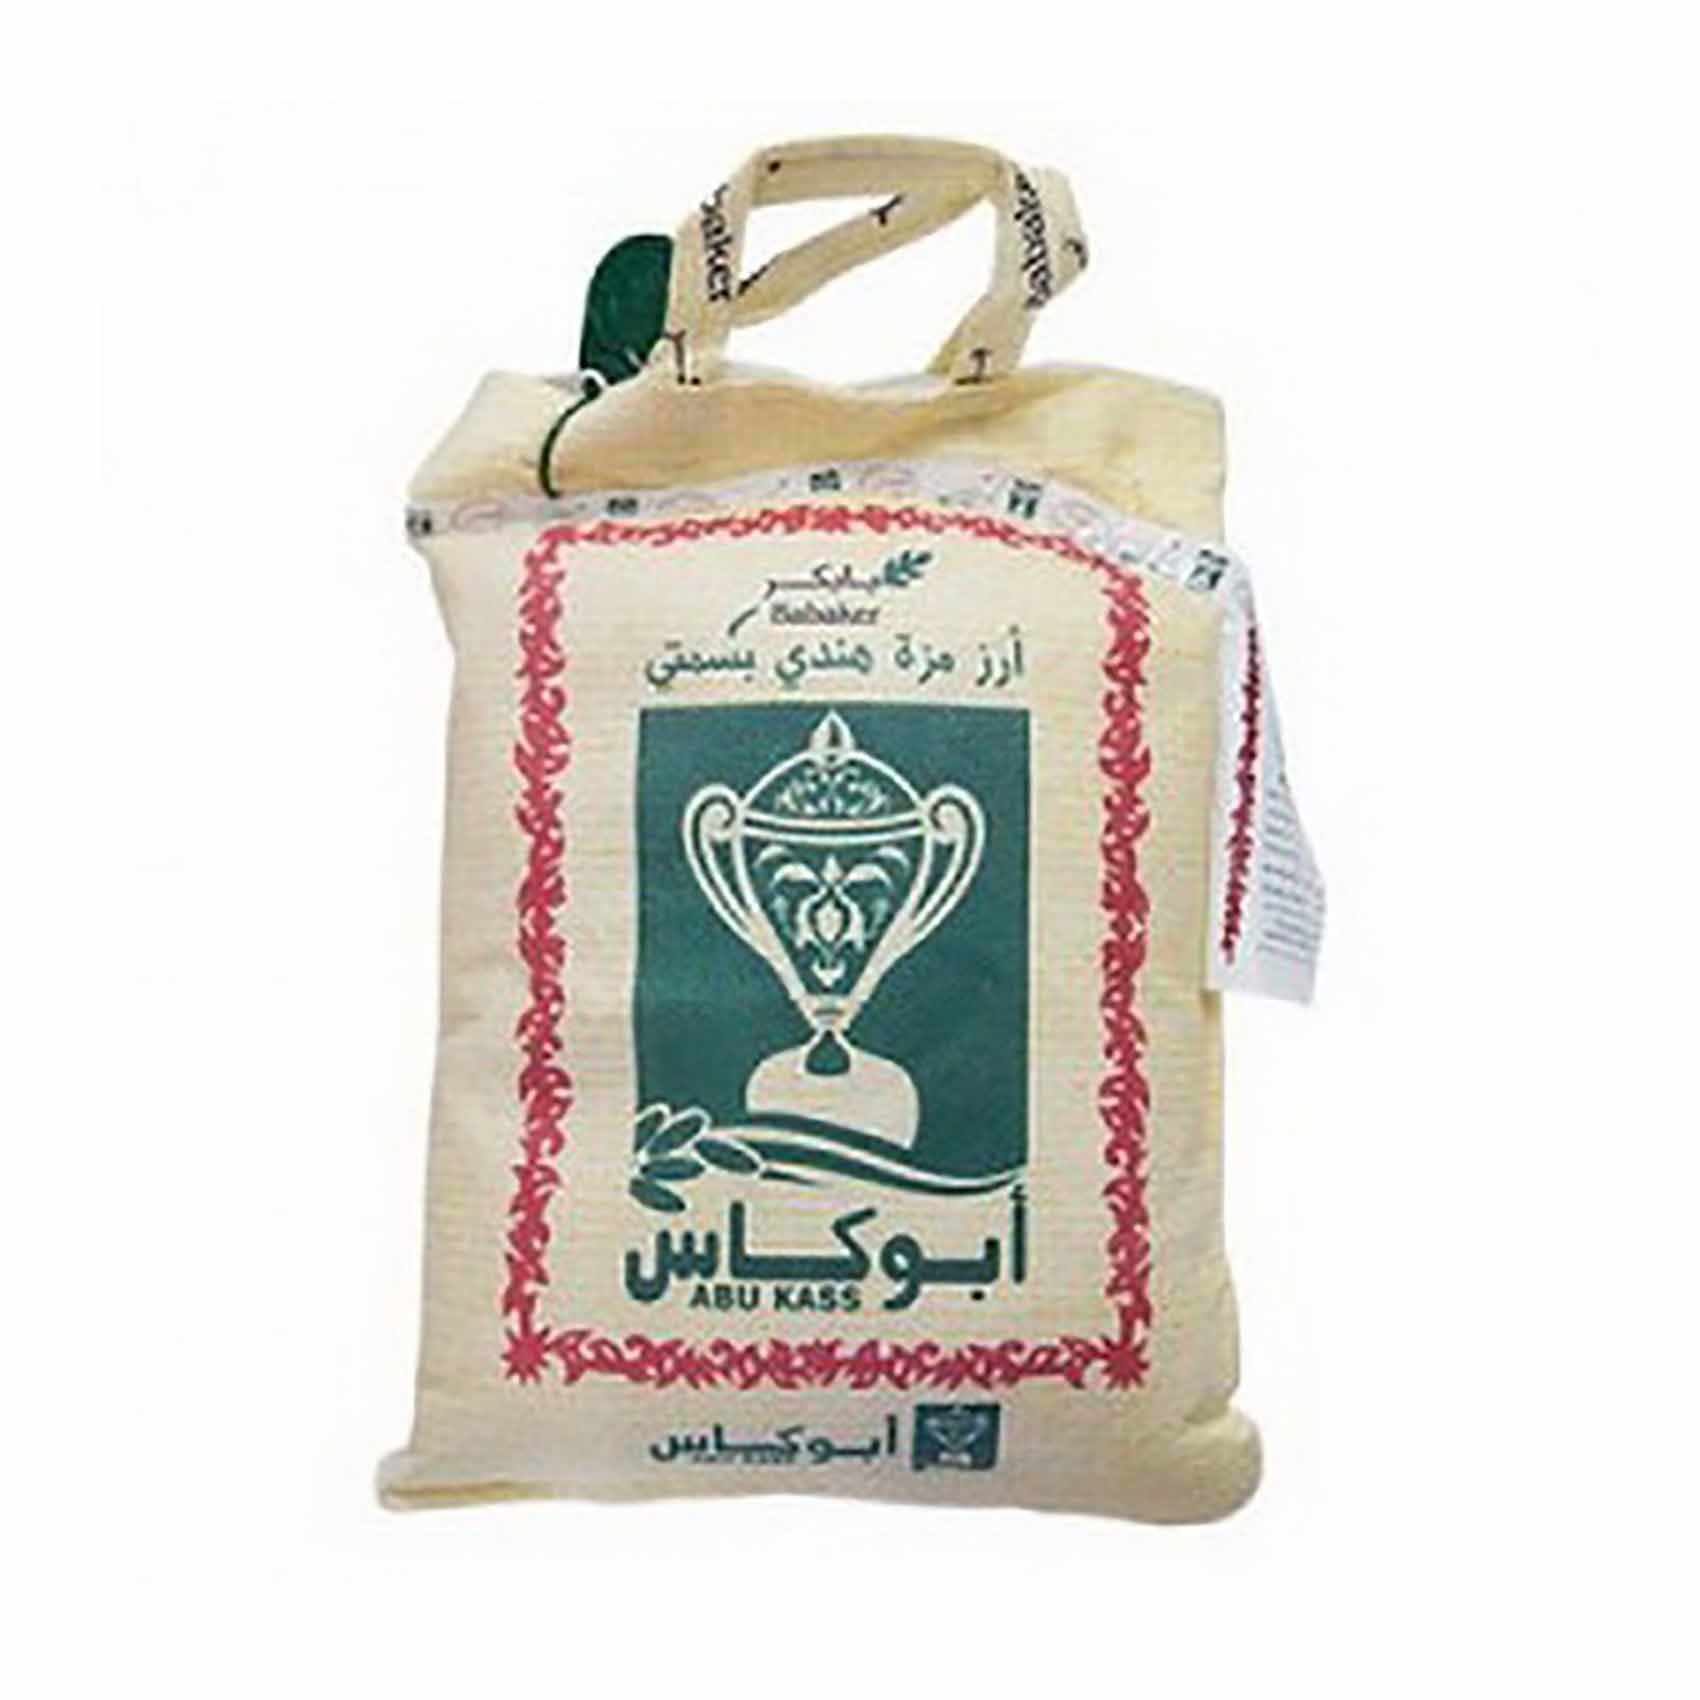 Buy Abu Kass Basmati Rice 2 Kg Online Shop Food Cupboard On Carrefour Egypt